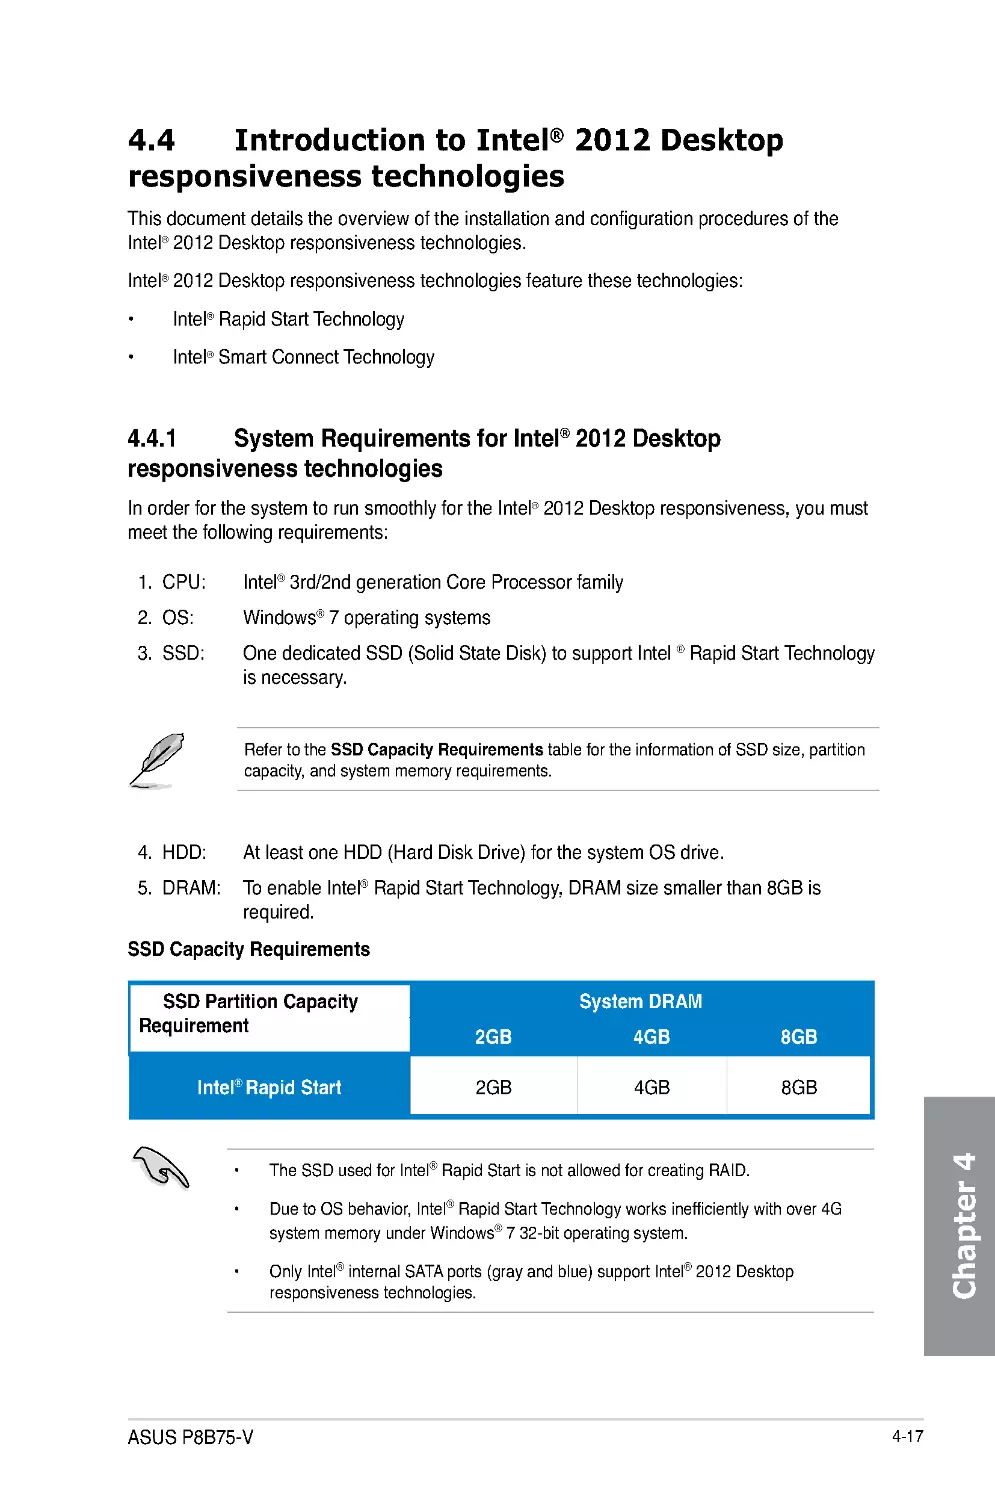 4.4	Introduction to Intel® 2012 Desktop responsiveness technologies